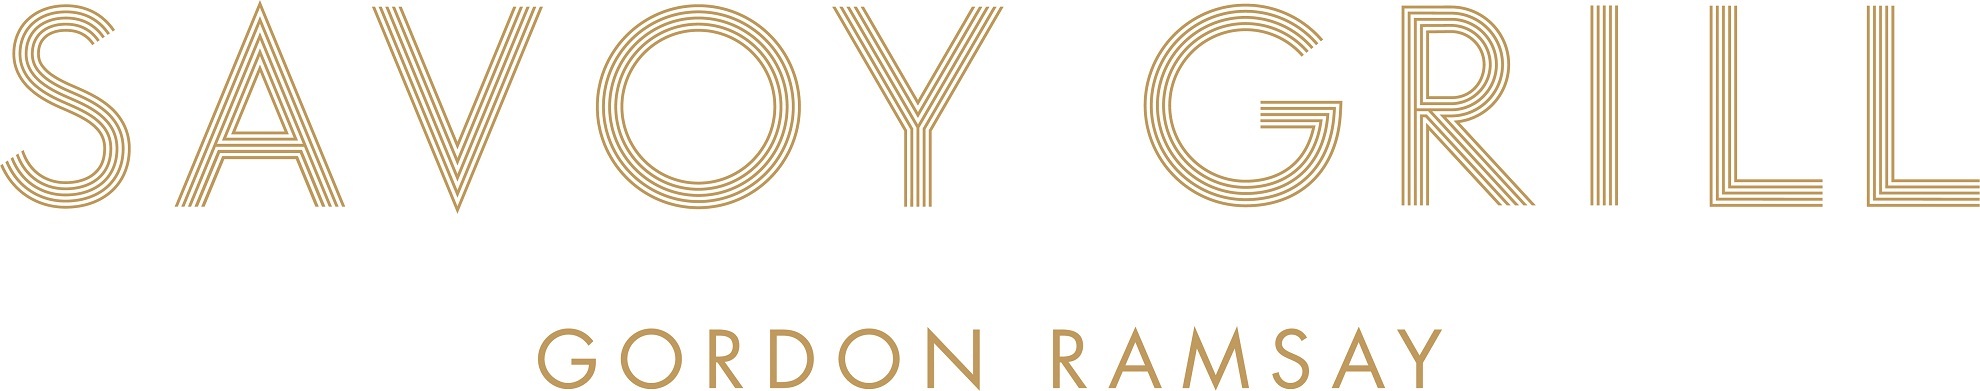 Savoy Grill by Gordon Ramsay